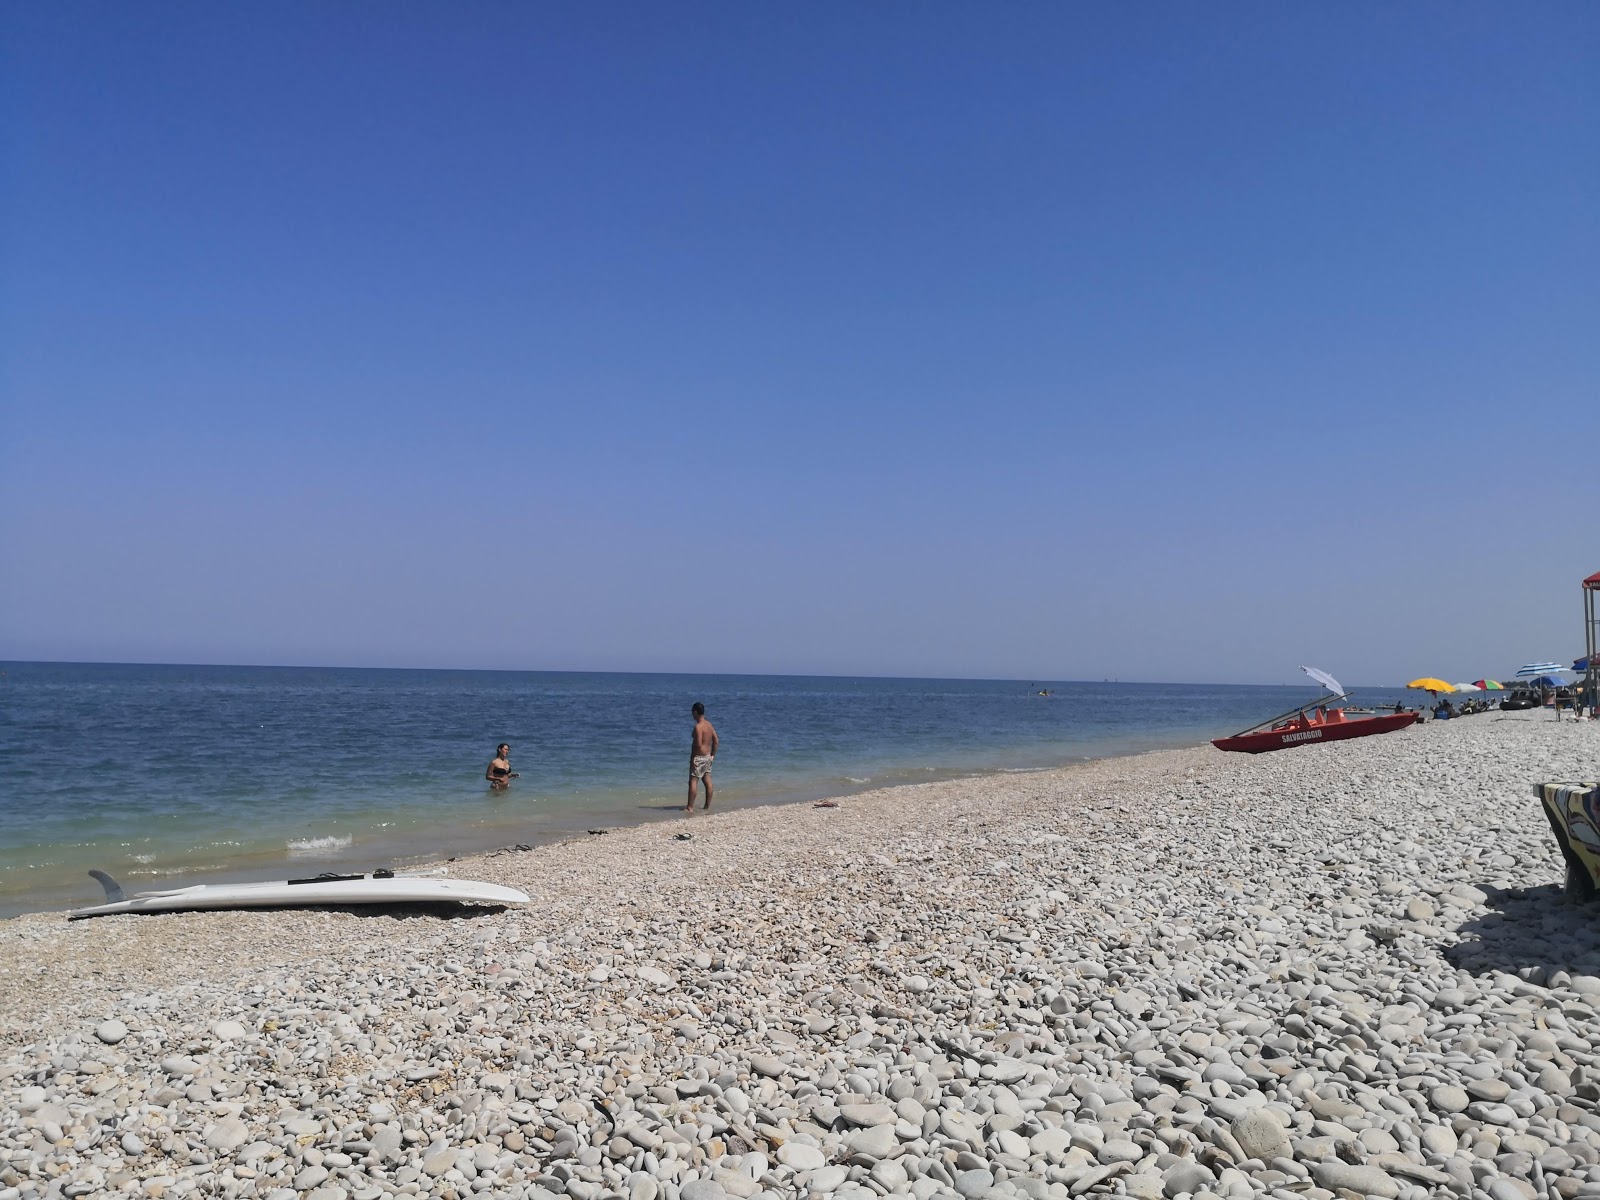 Foto de Spiaggia di Fossacesia Marina - lugar popular entre los conocedores del relax